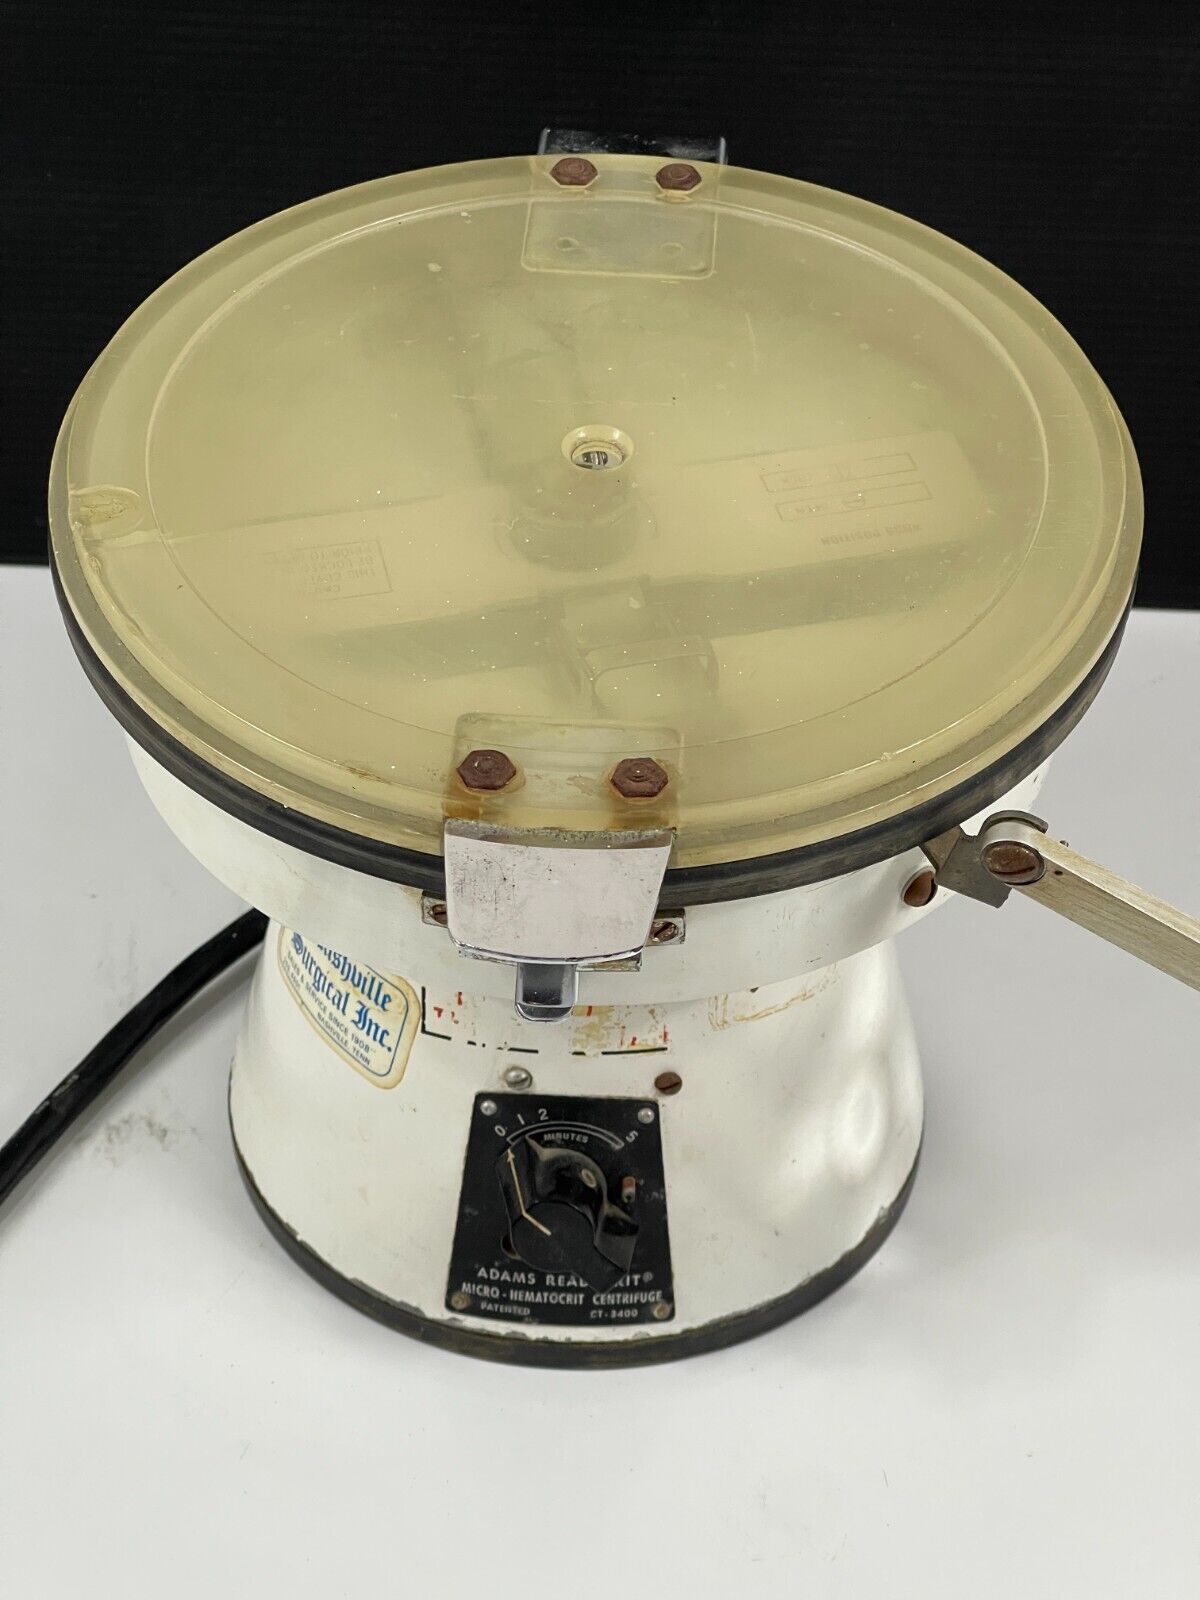 Clay Adams Readacrit Micro-Hematocrit Centrifuge CT-3400 Tested-Spins - $148.49